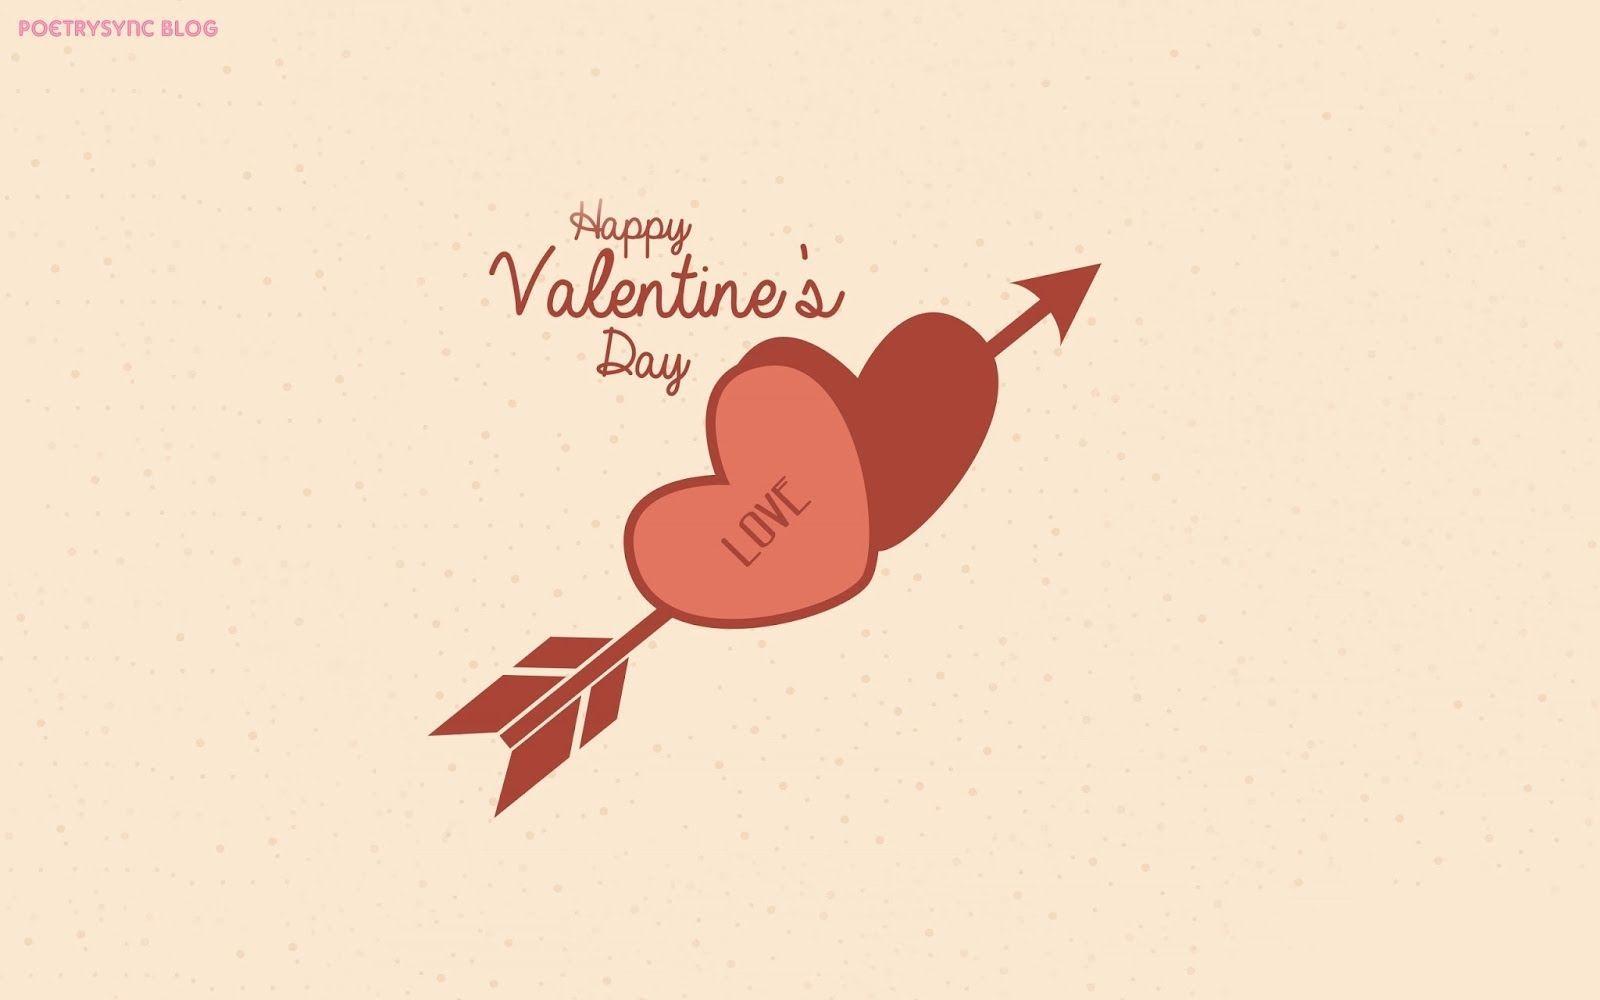 Happy Valentine's Day Cupid Arrow Wallpaper Picture, Photo